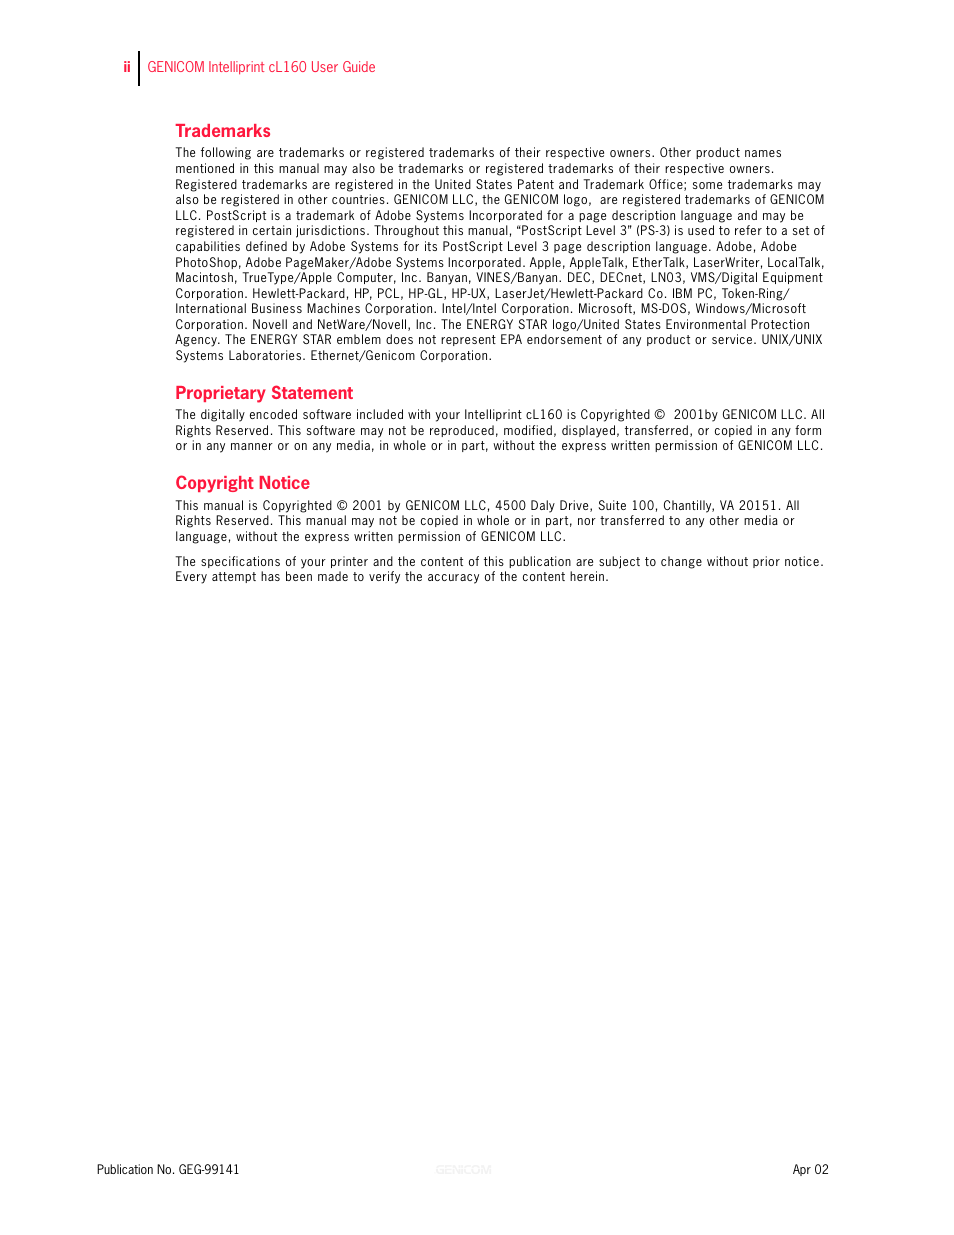 Trademarks, Proprietary statement, Copyright notice | Genicom cL160 User Manual | Page 2 / 216